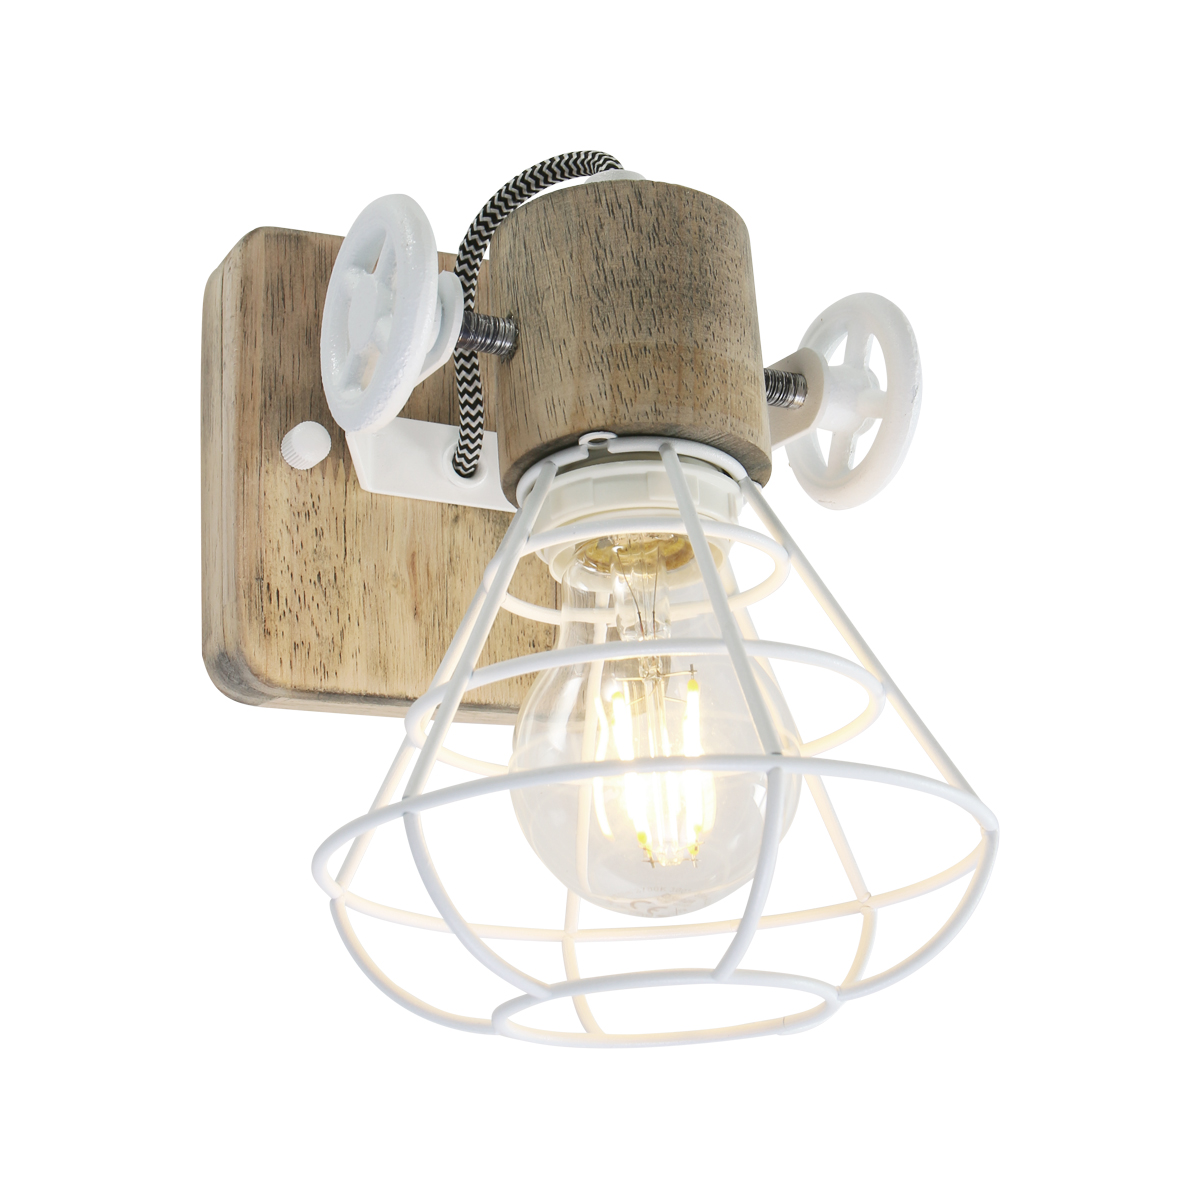 Houten wandlamp Guernsey wit | Industriele lampen